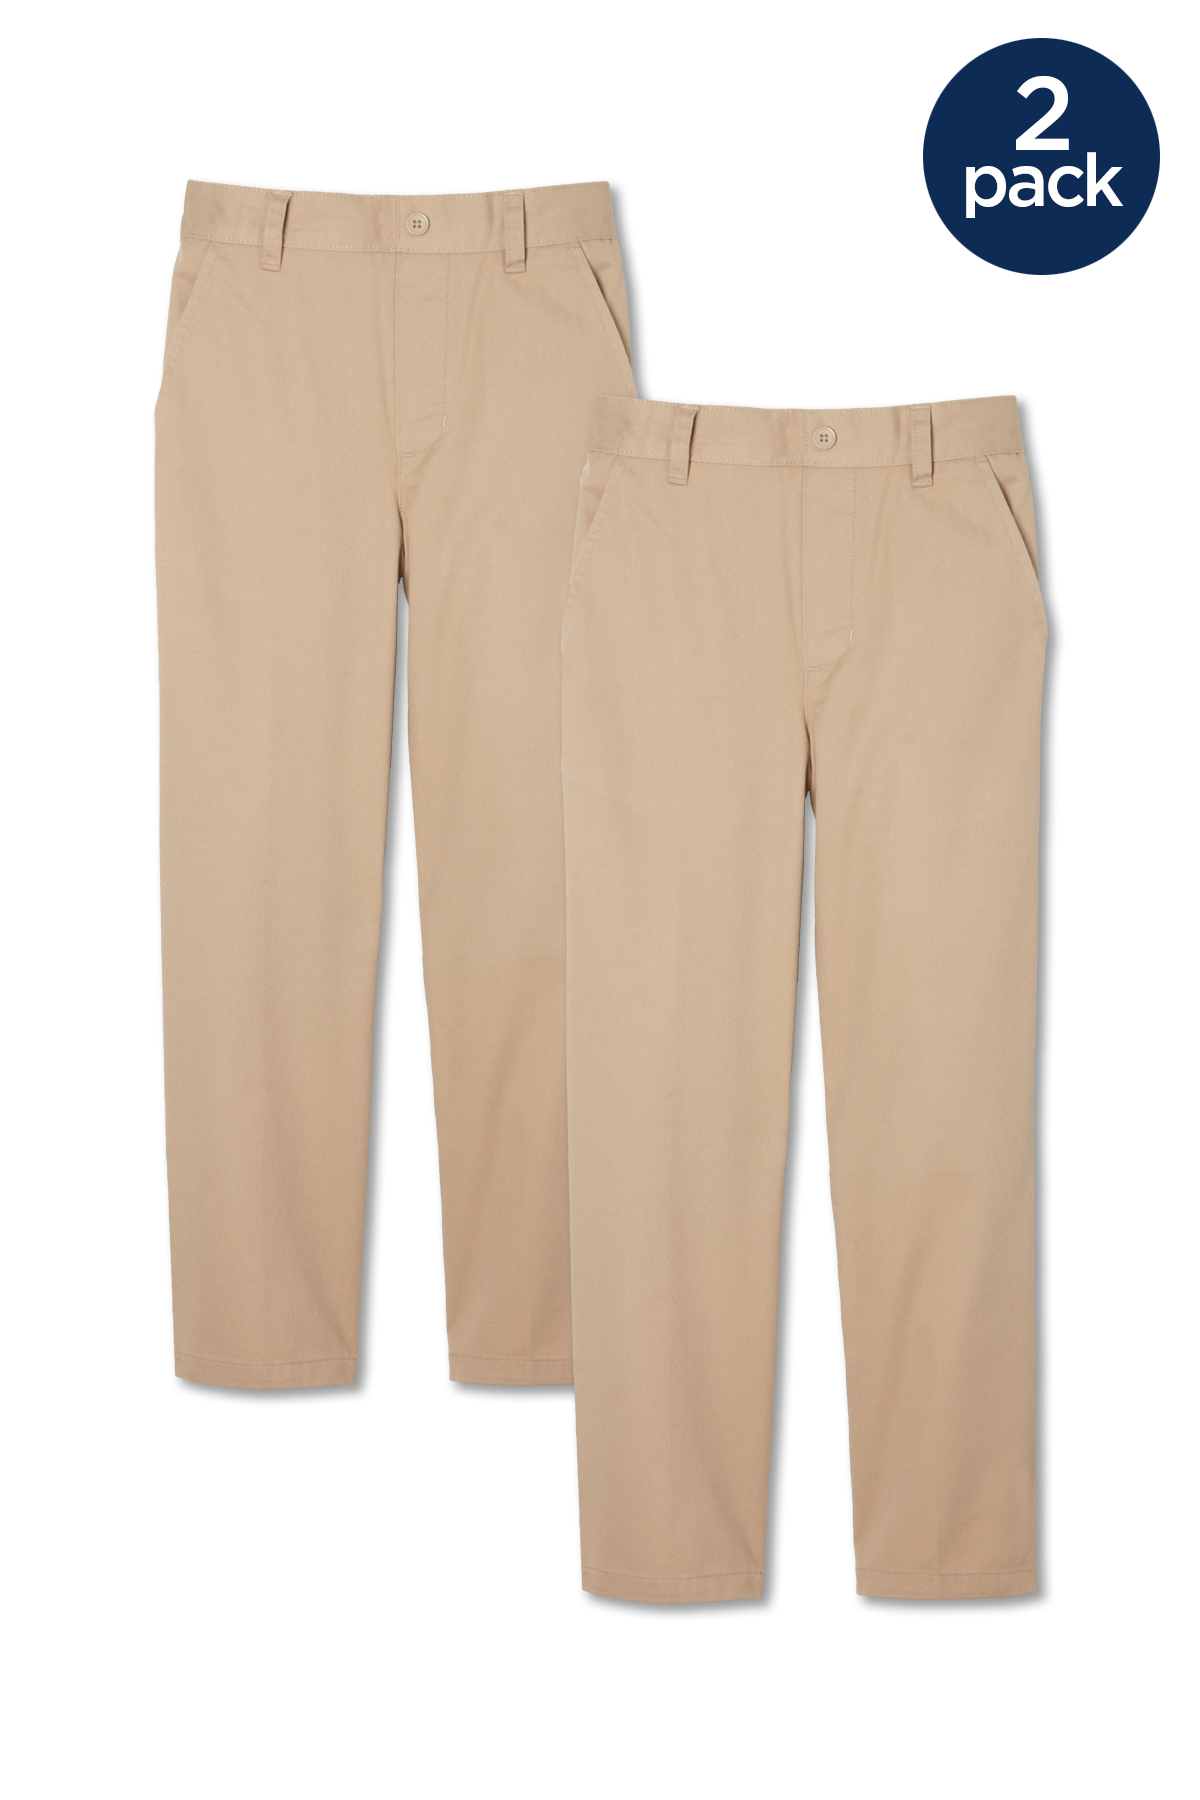 K9001 French Toast Boys Modern Fit School Uniforms Double Knee Pants